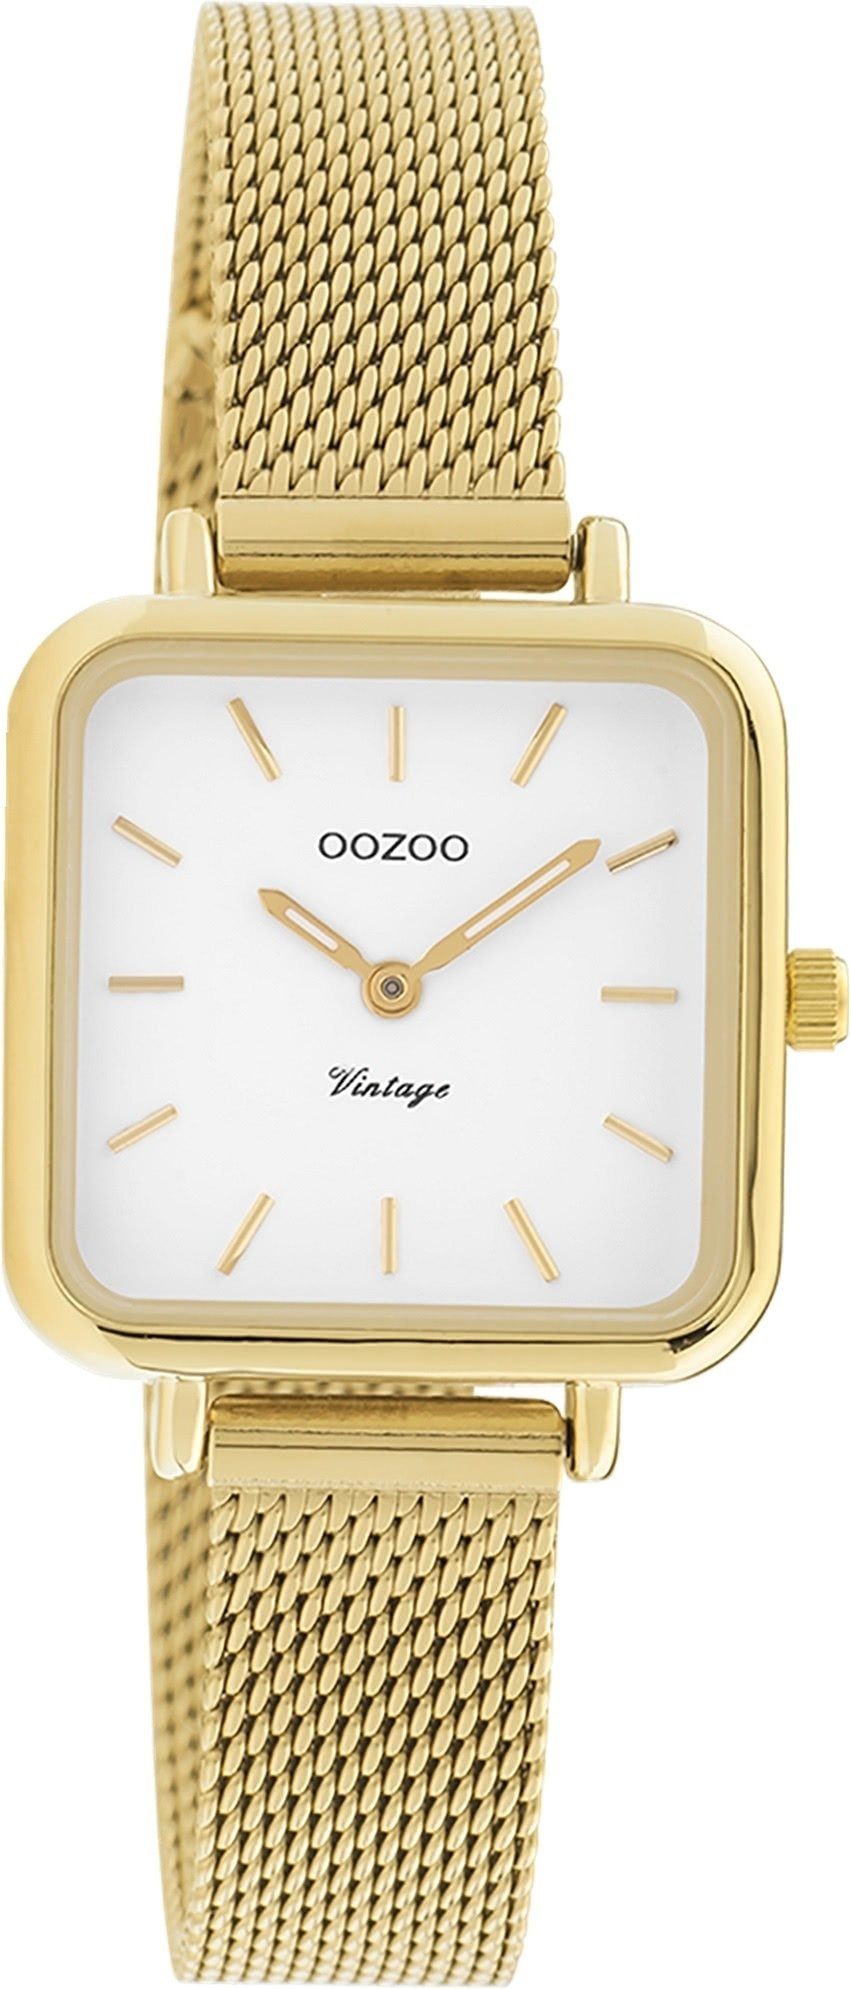 OOZOO Quarzuhr Oozoo Damen Armbanduhr Vintage Series, Damenuhr rechteckig, klein (26x26mm) Metall, Mesharmband, Casual-Style